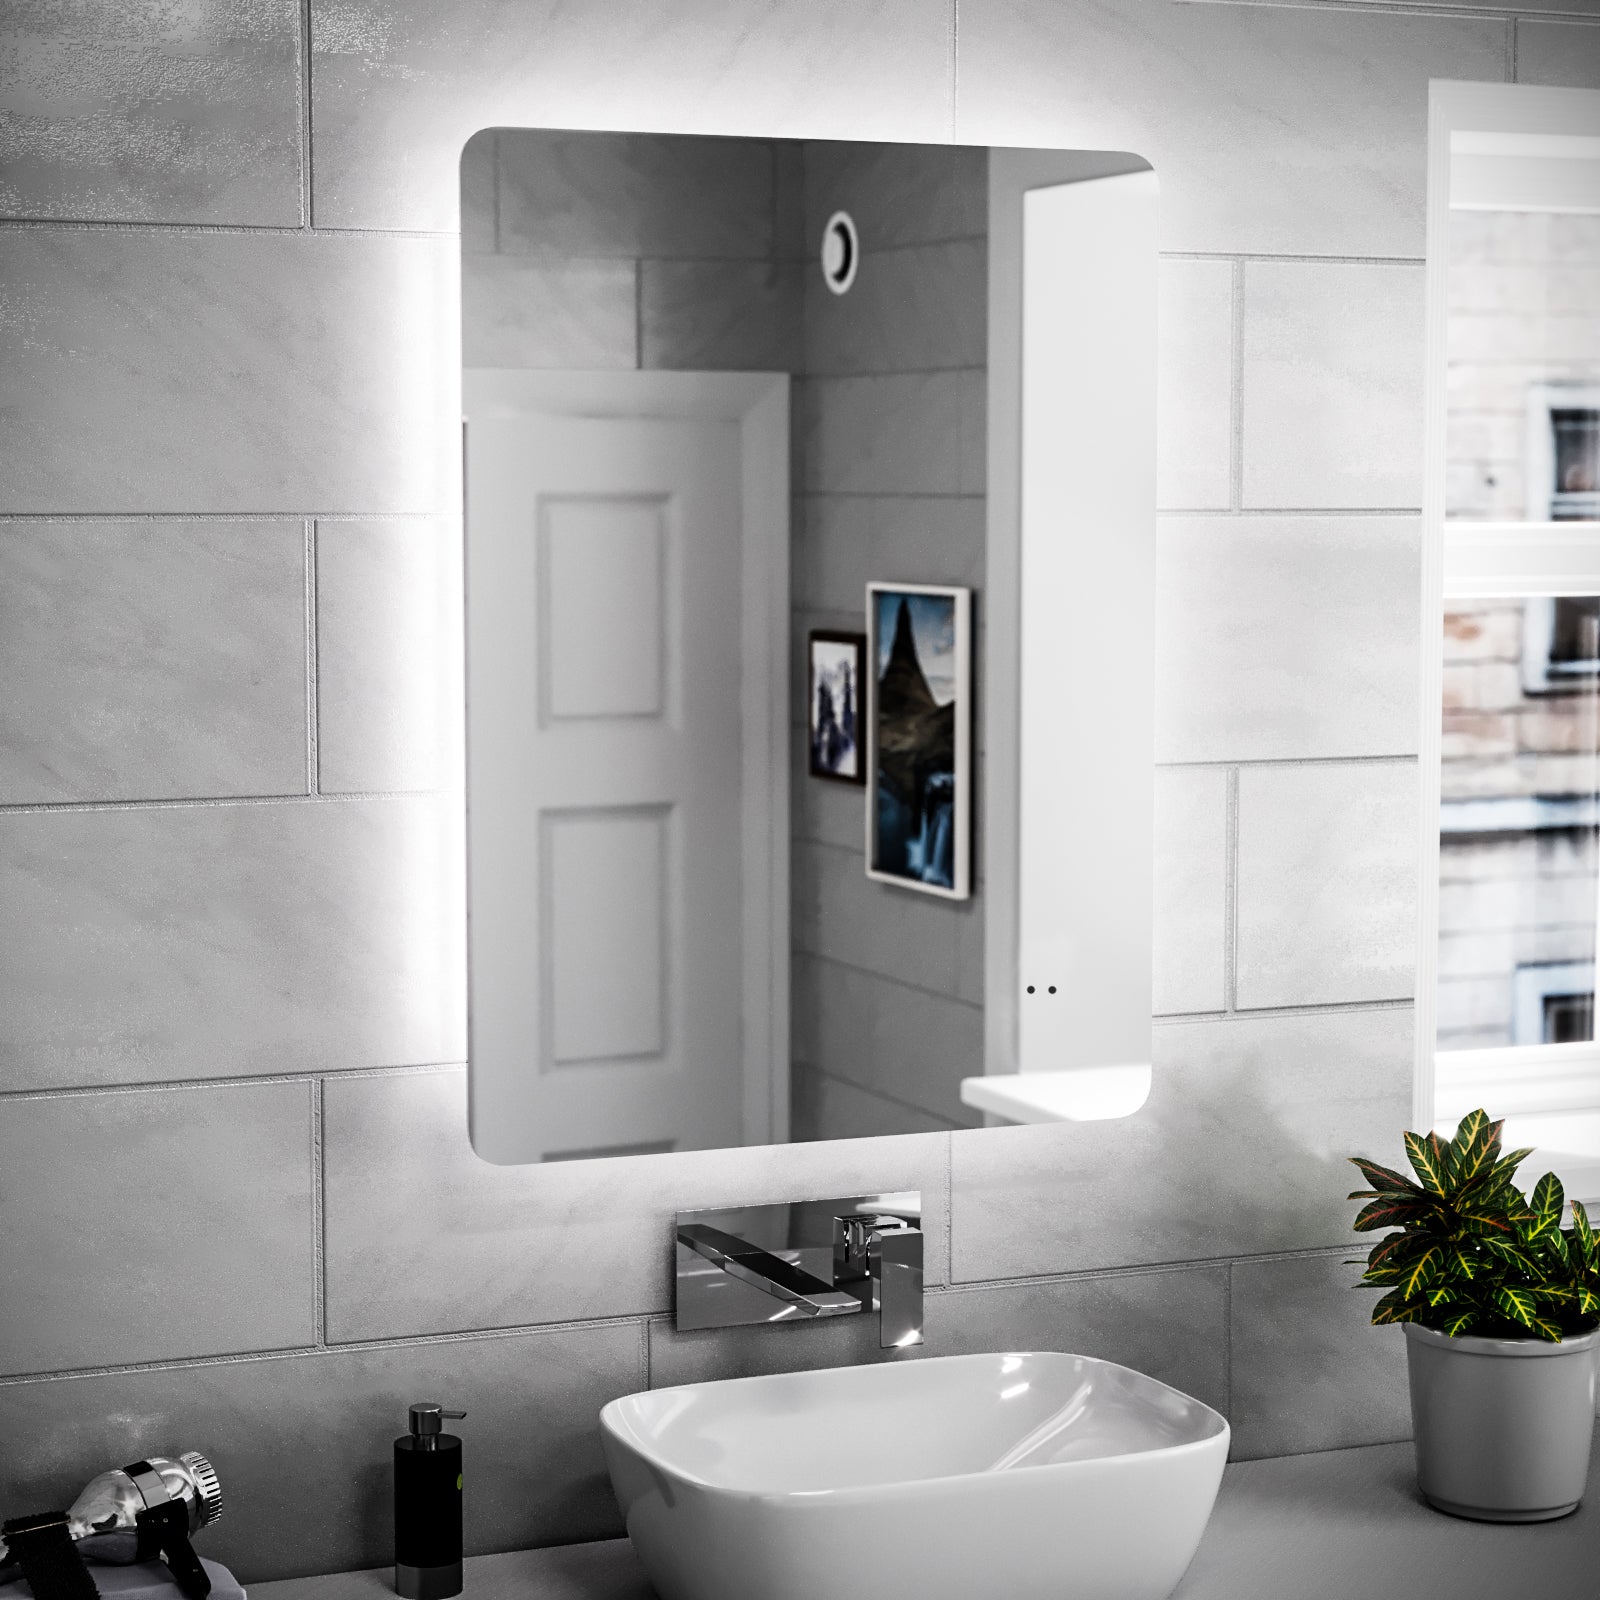 LED 600mm x 800mm IP44 Illuminated Round Corner Bathroom Mirror